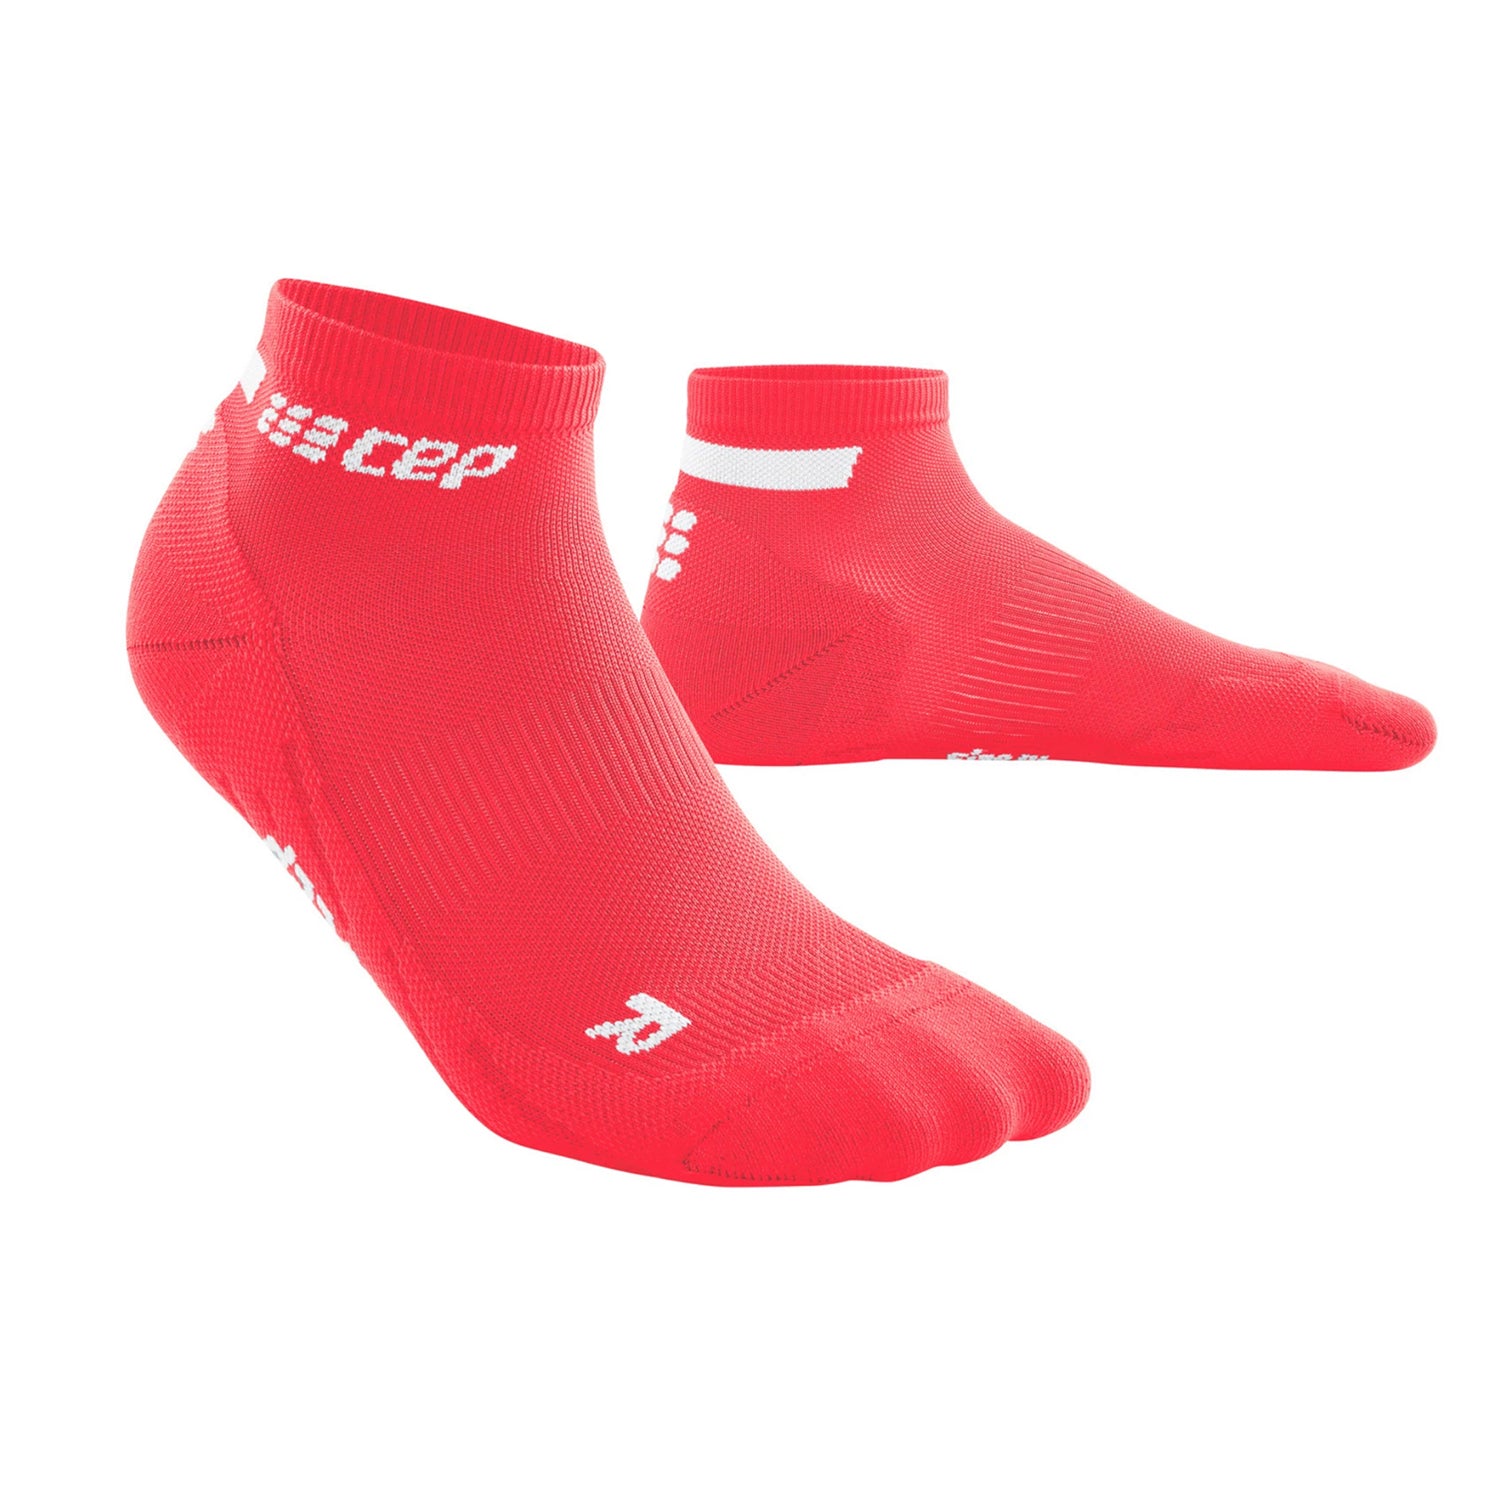 High compression socks for cold weather CEP Compression - Socks